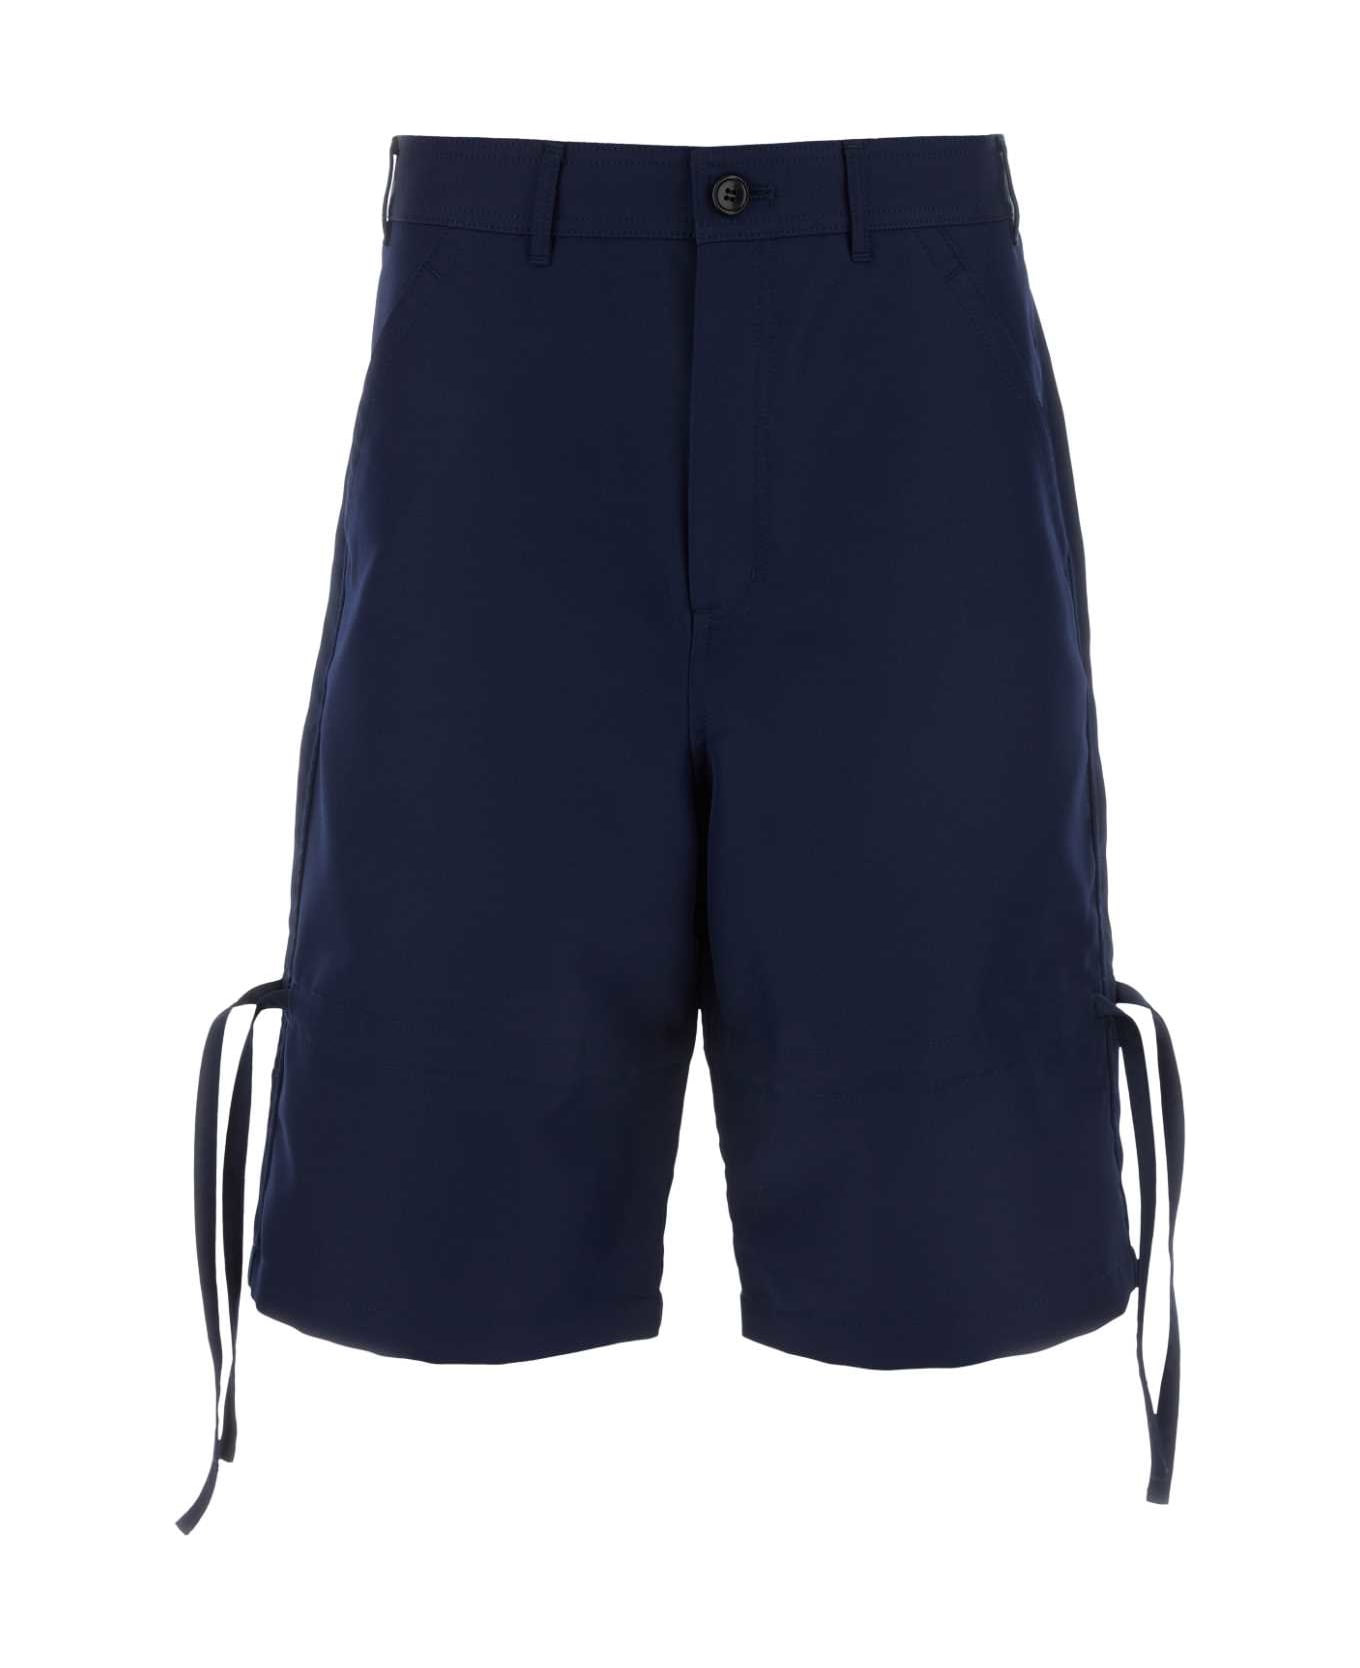 Comme des Garçons Navy Blue Polyester Bermuda Shorts - NAVY